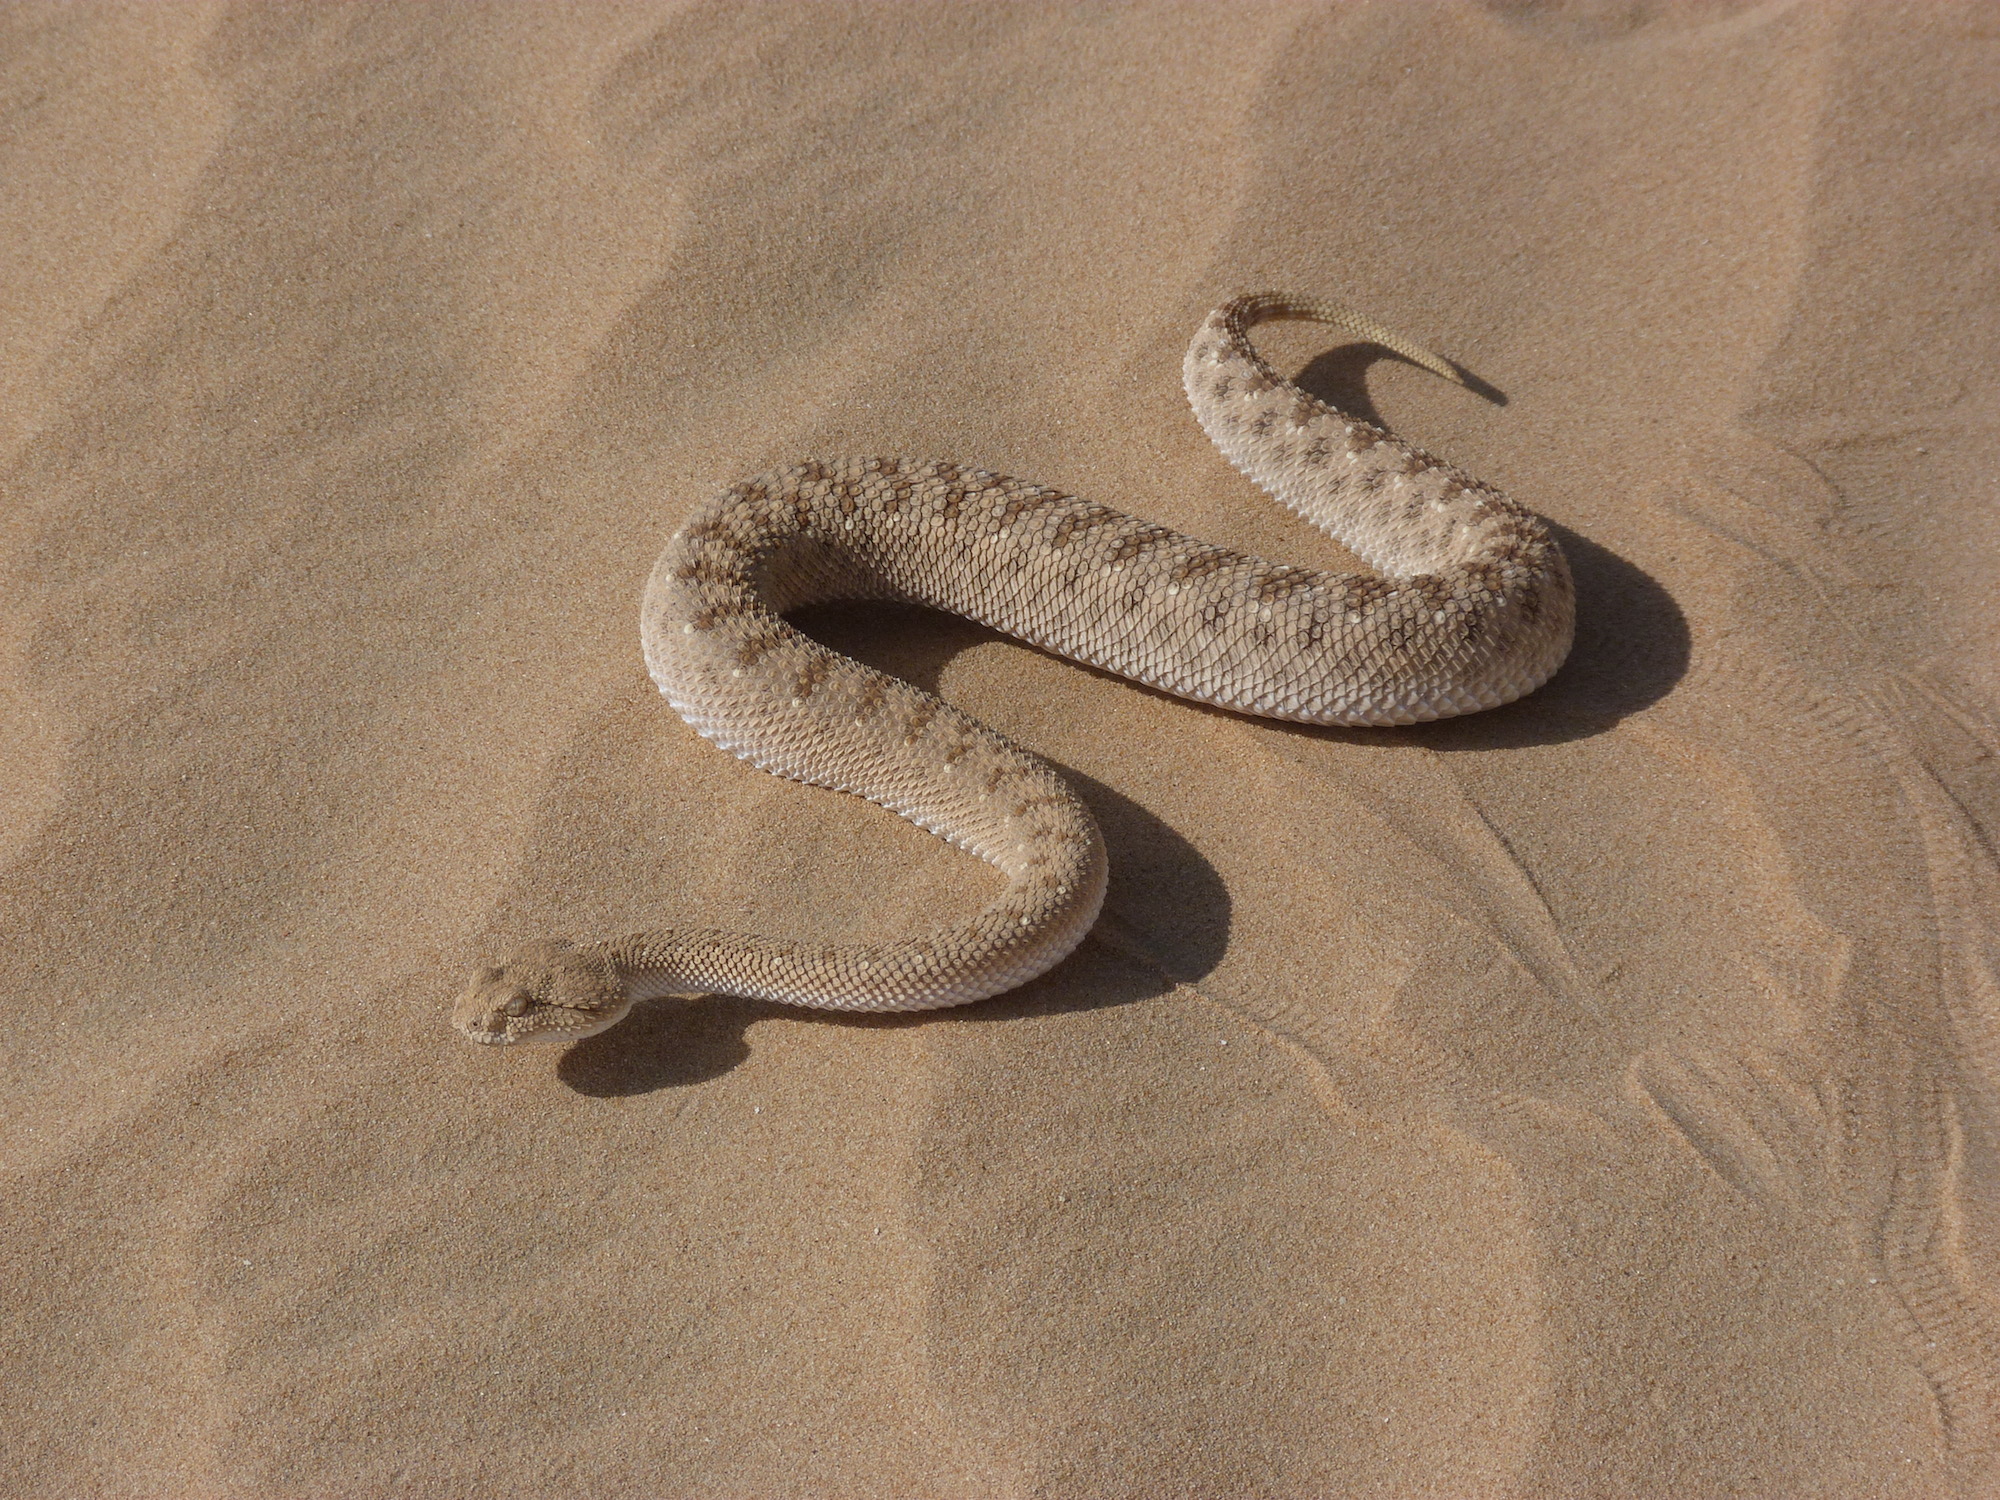 Weekend with Snakes in UAE | Weekend ideas for the UAE